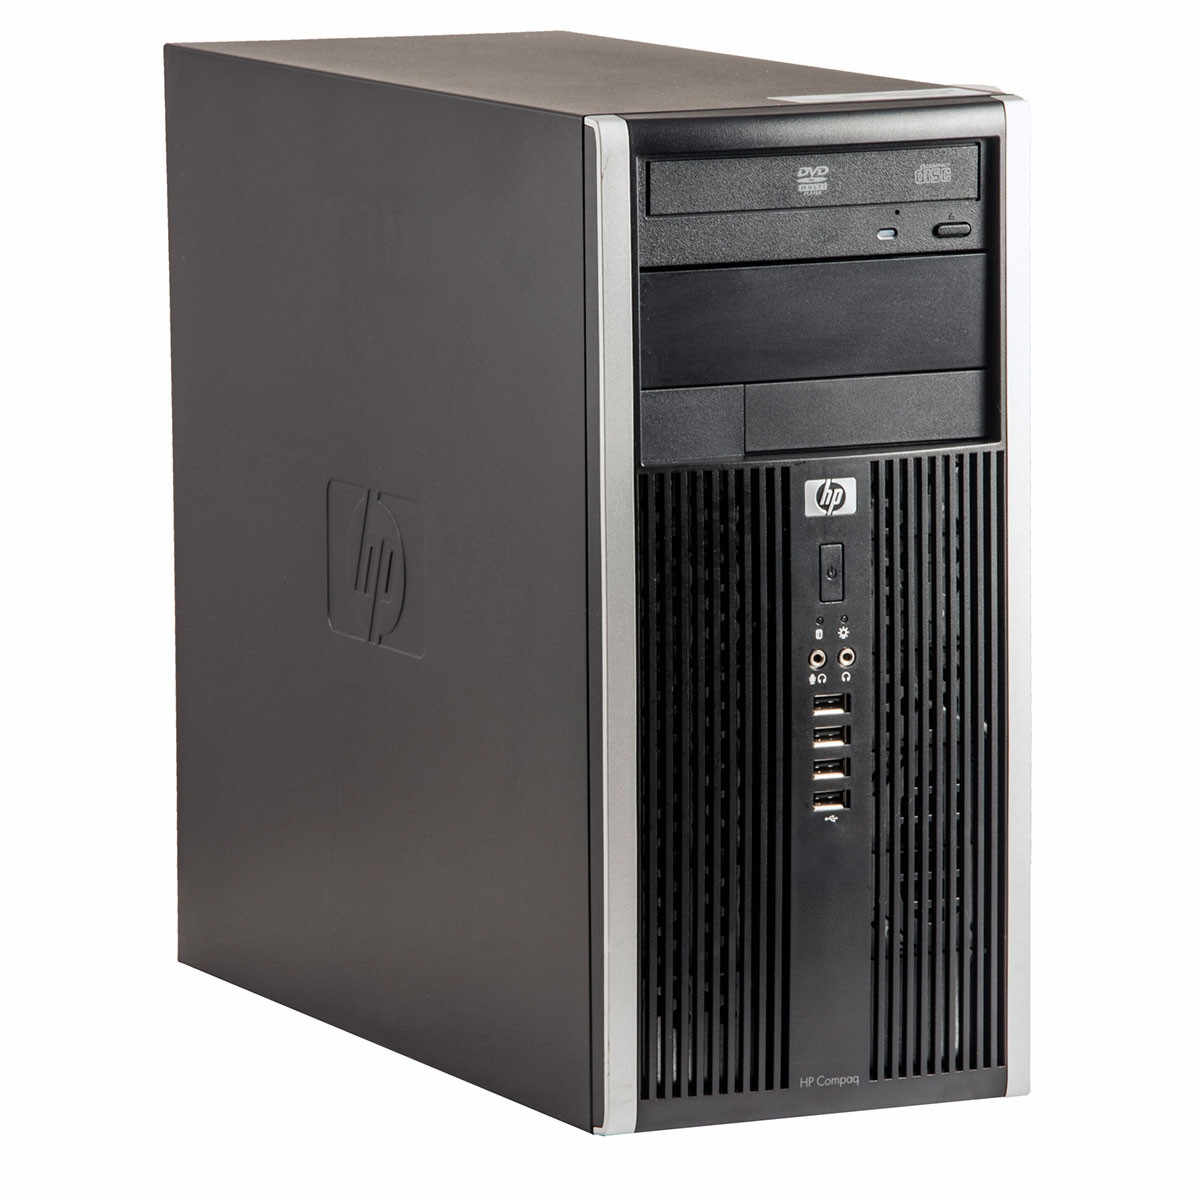 Calculator HP 6300 Tower, Intel Core i7-3770S 3.10GHz, 8GB DDR3, 120GB SSD, DVD-RW